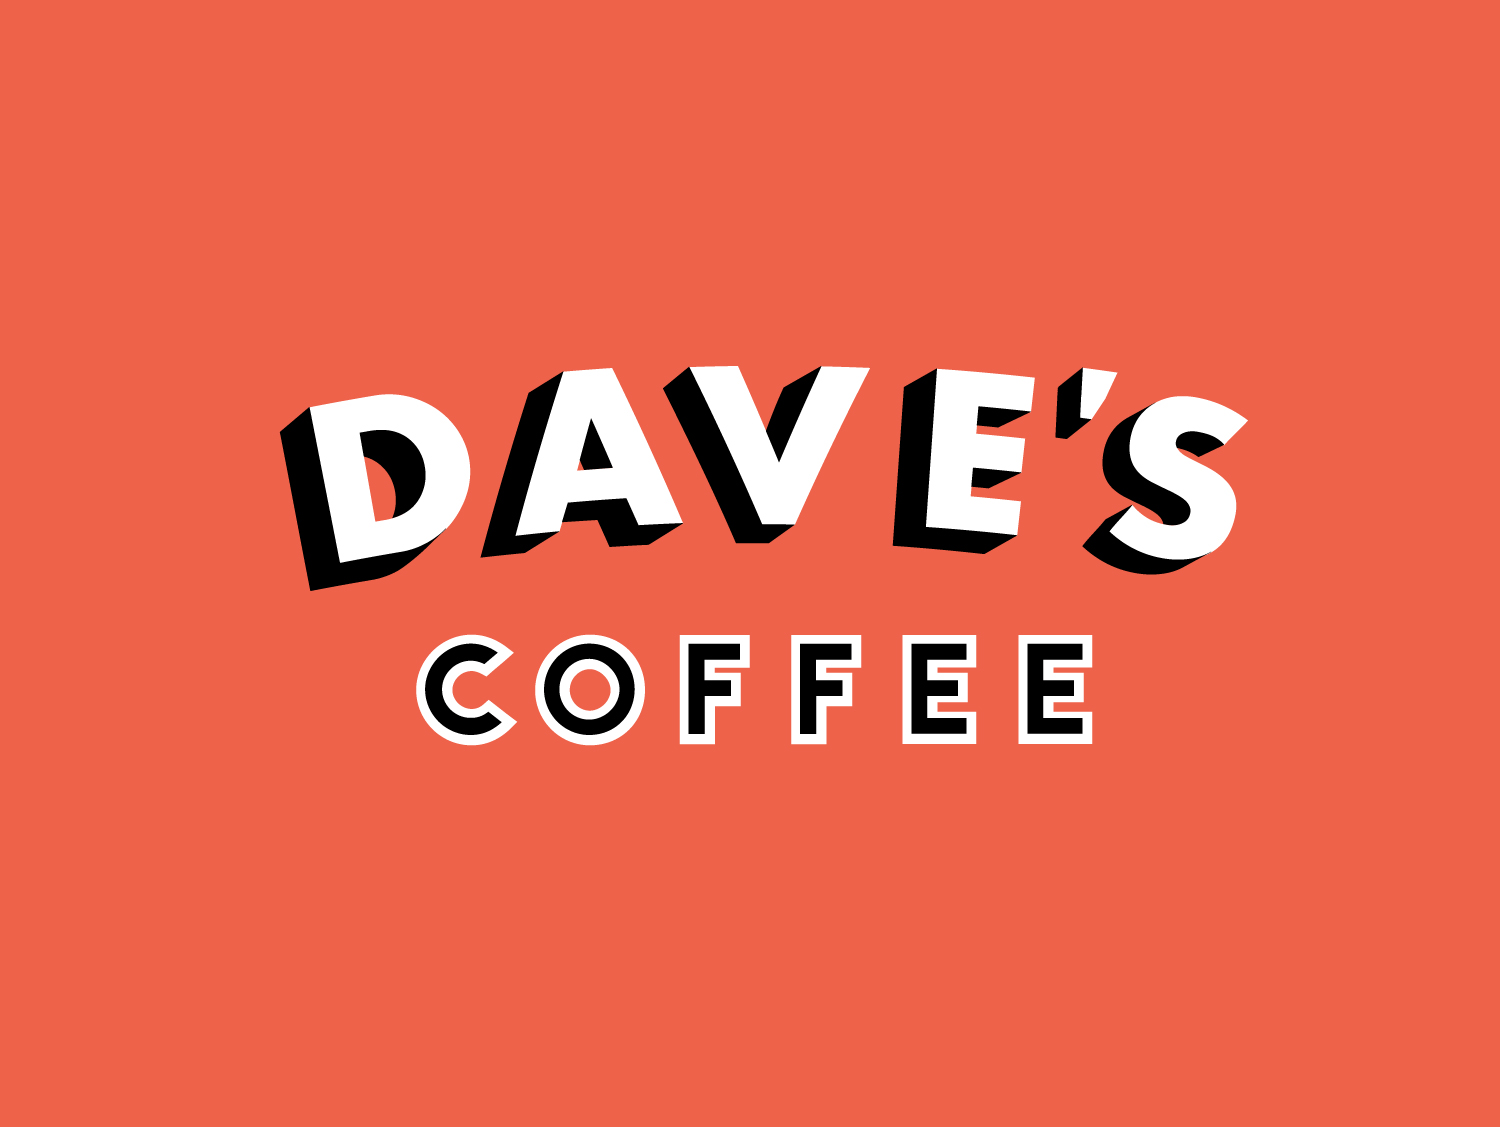 Daves-Coffee-logo-03.jpg